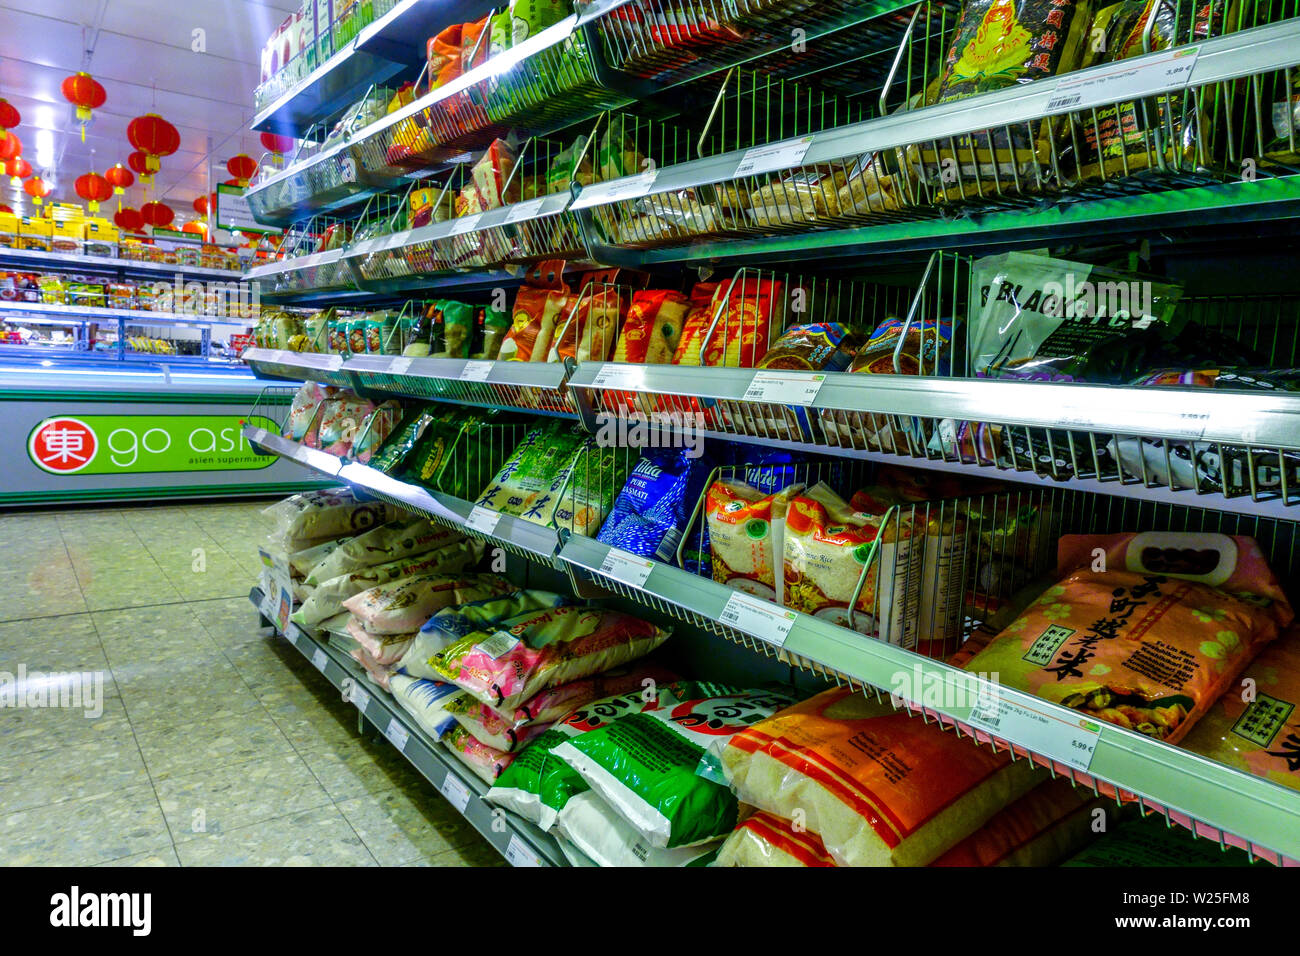 Asian supermarket 'Go Asia' supermarket shelves, rack with rice, Dresden, Germany Stock Photo